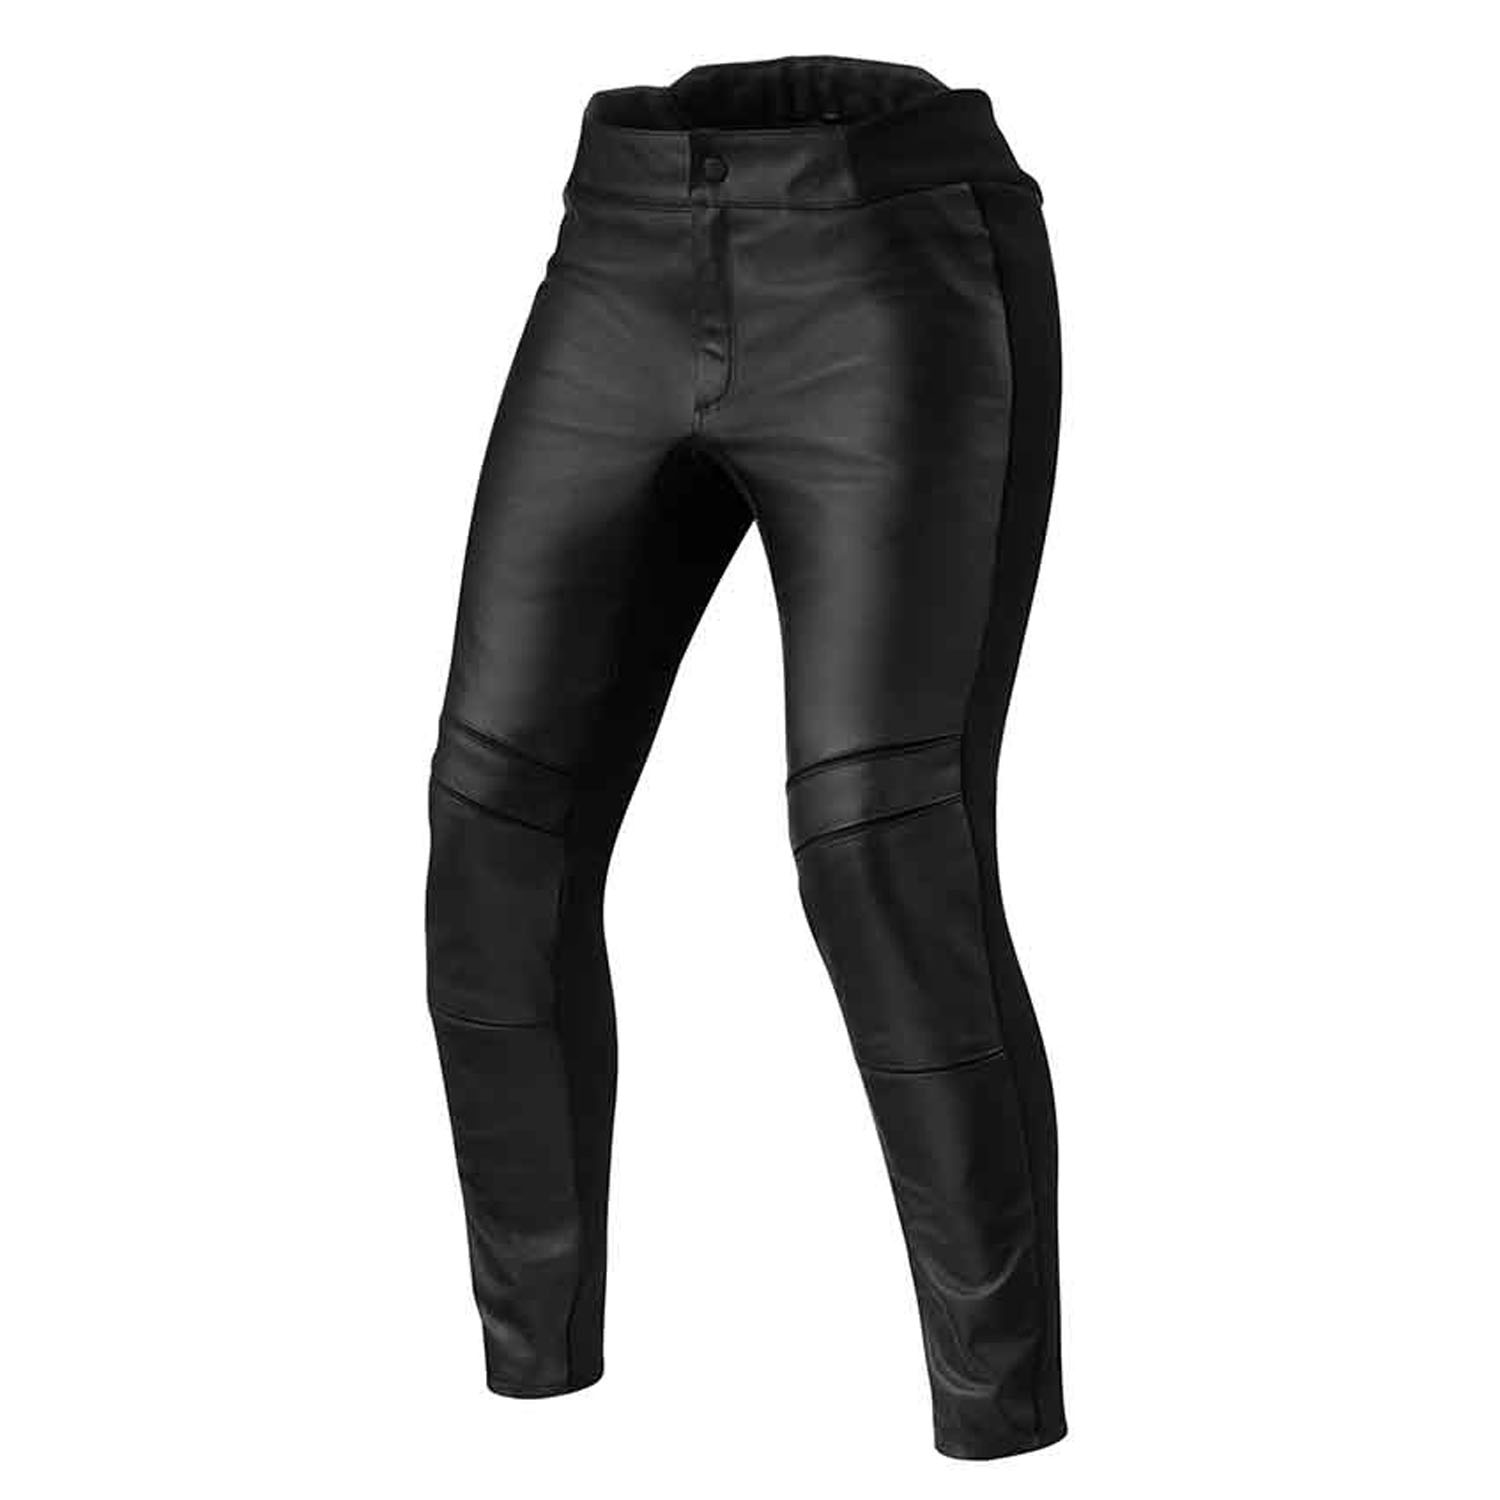 Image of EU REV'IT! Maci Ladies Black Standard Motorcycle Pants Taille 40